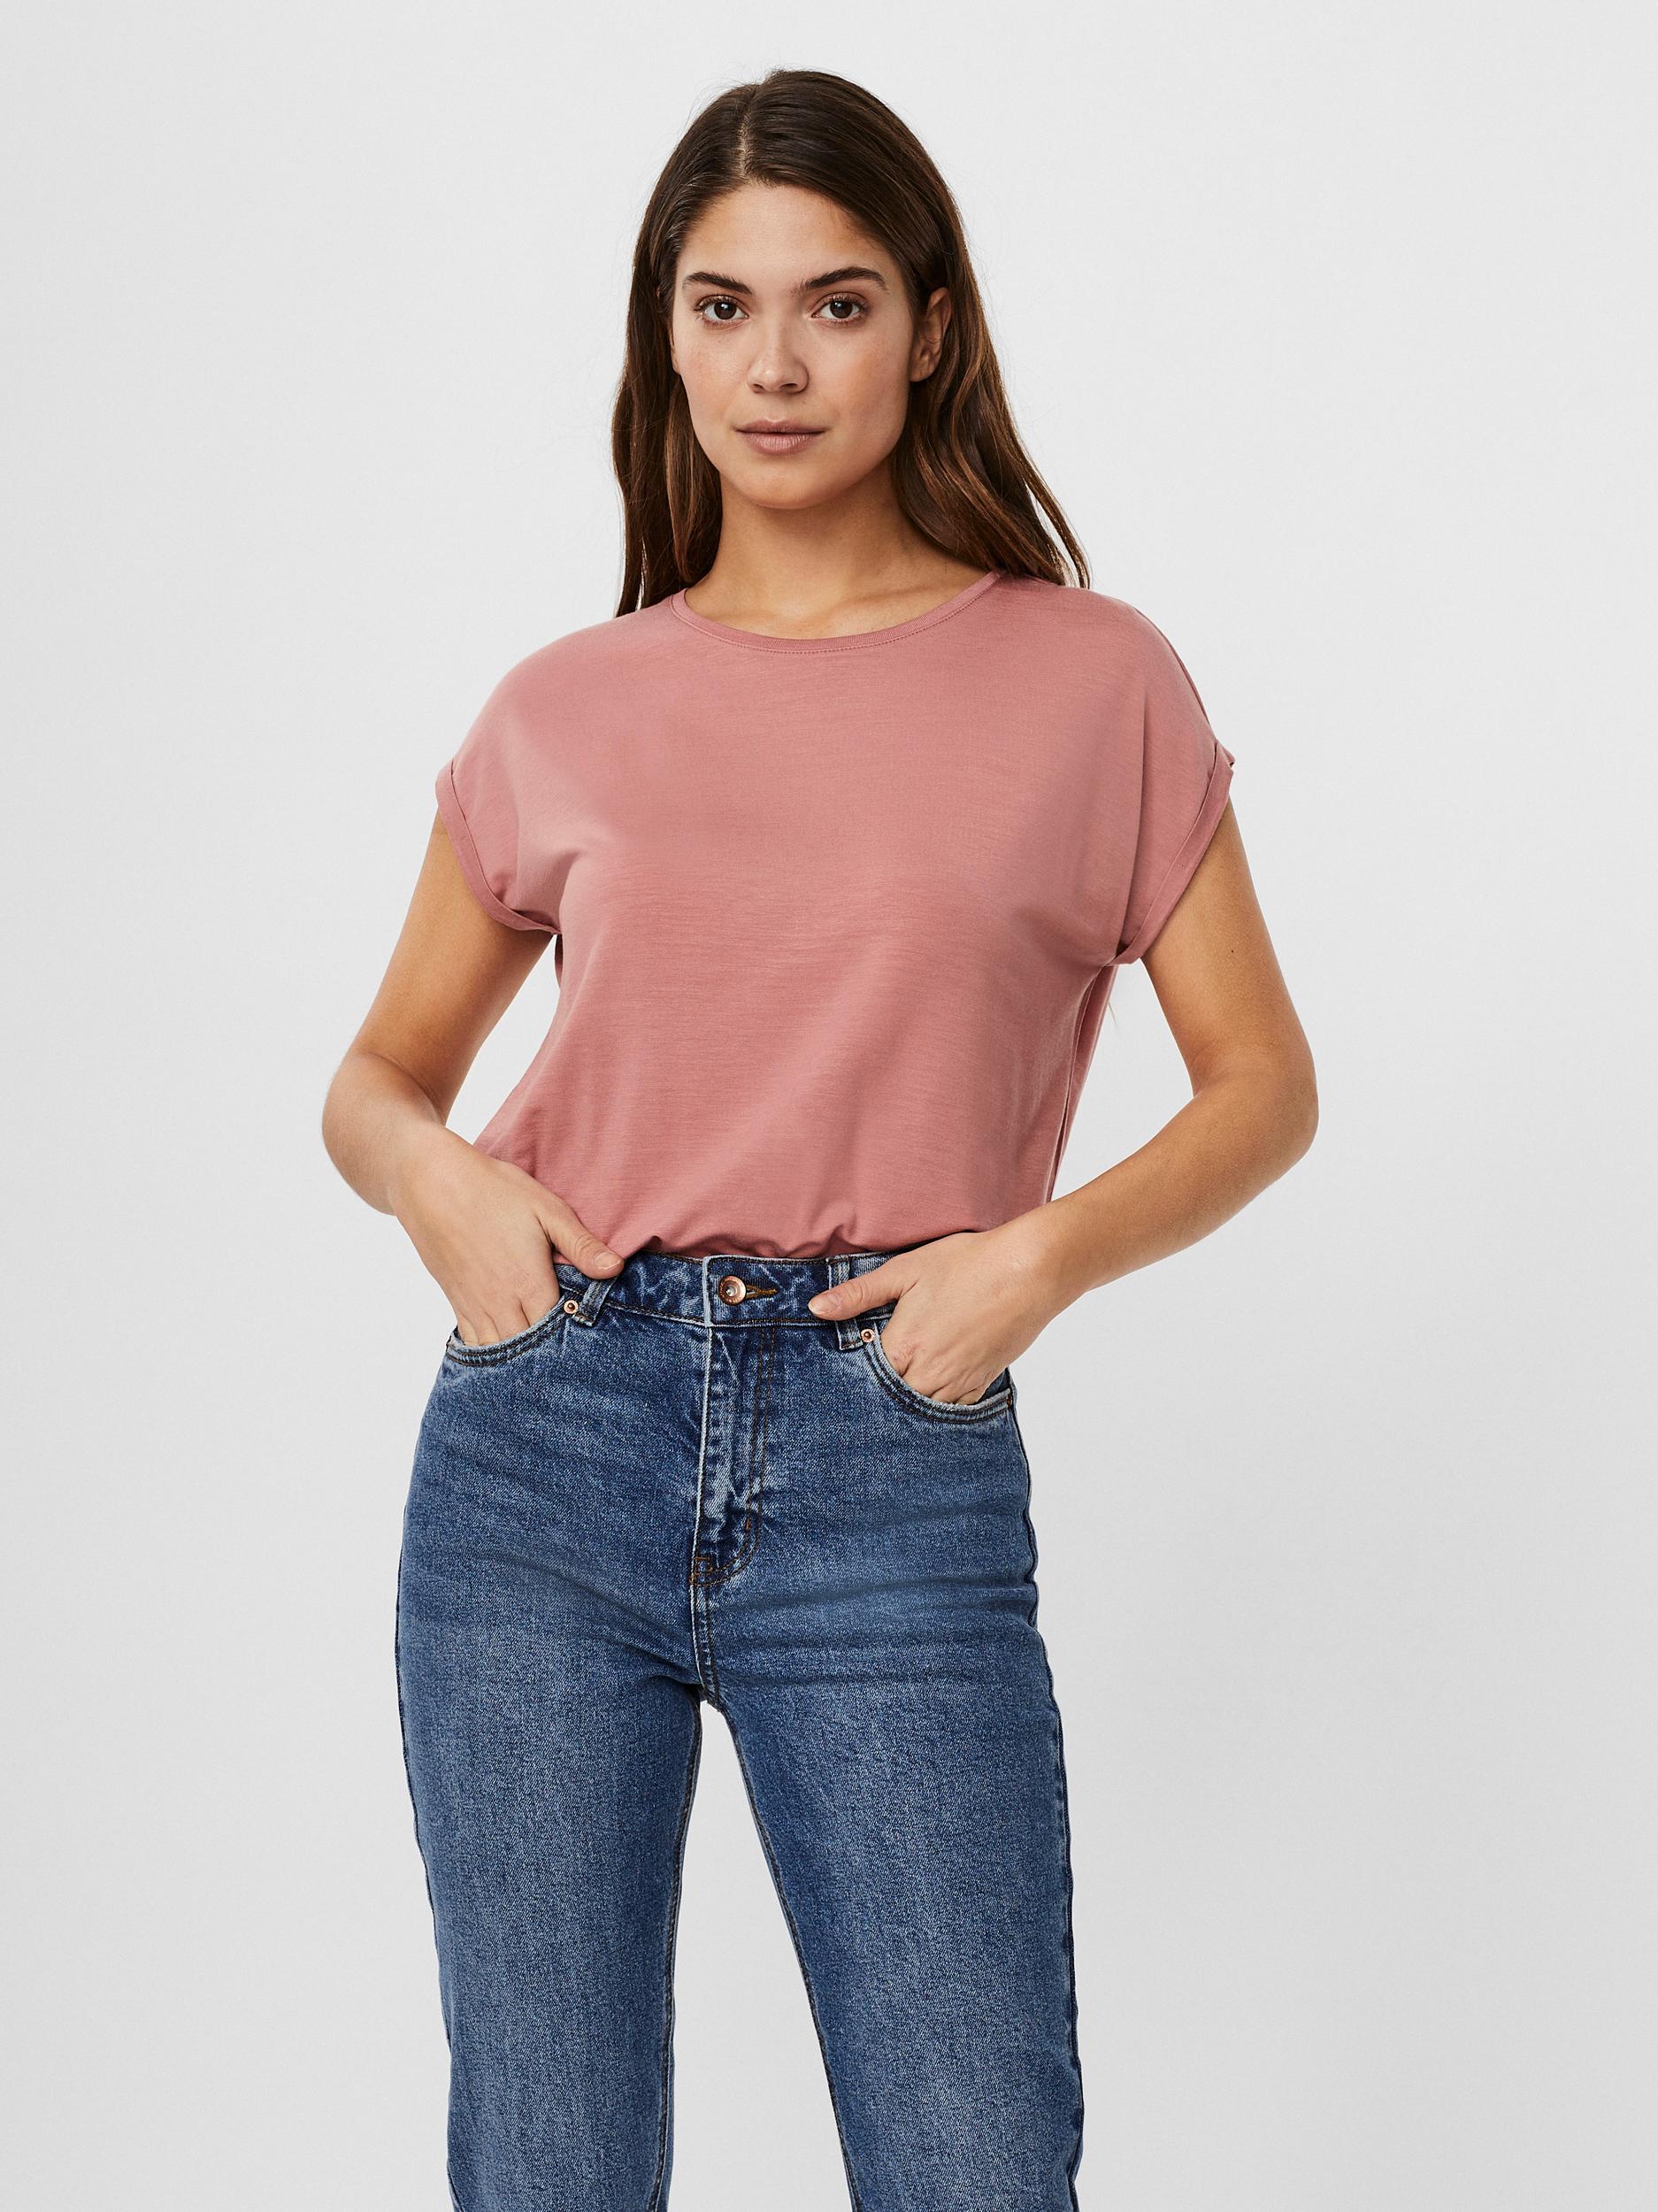 AWARE | Ava T-Shirt, OLD ROSE, large